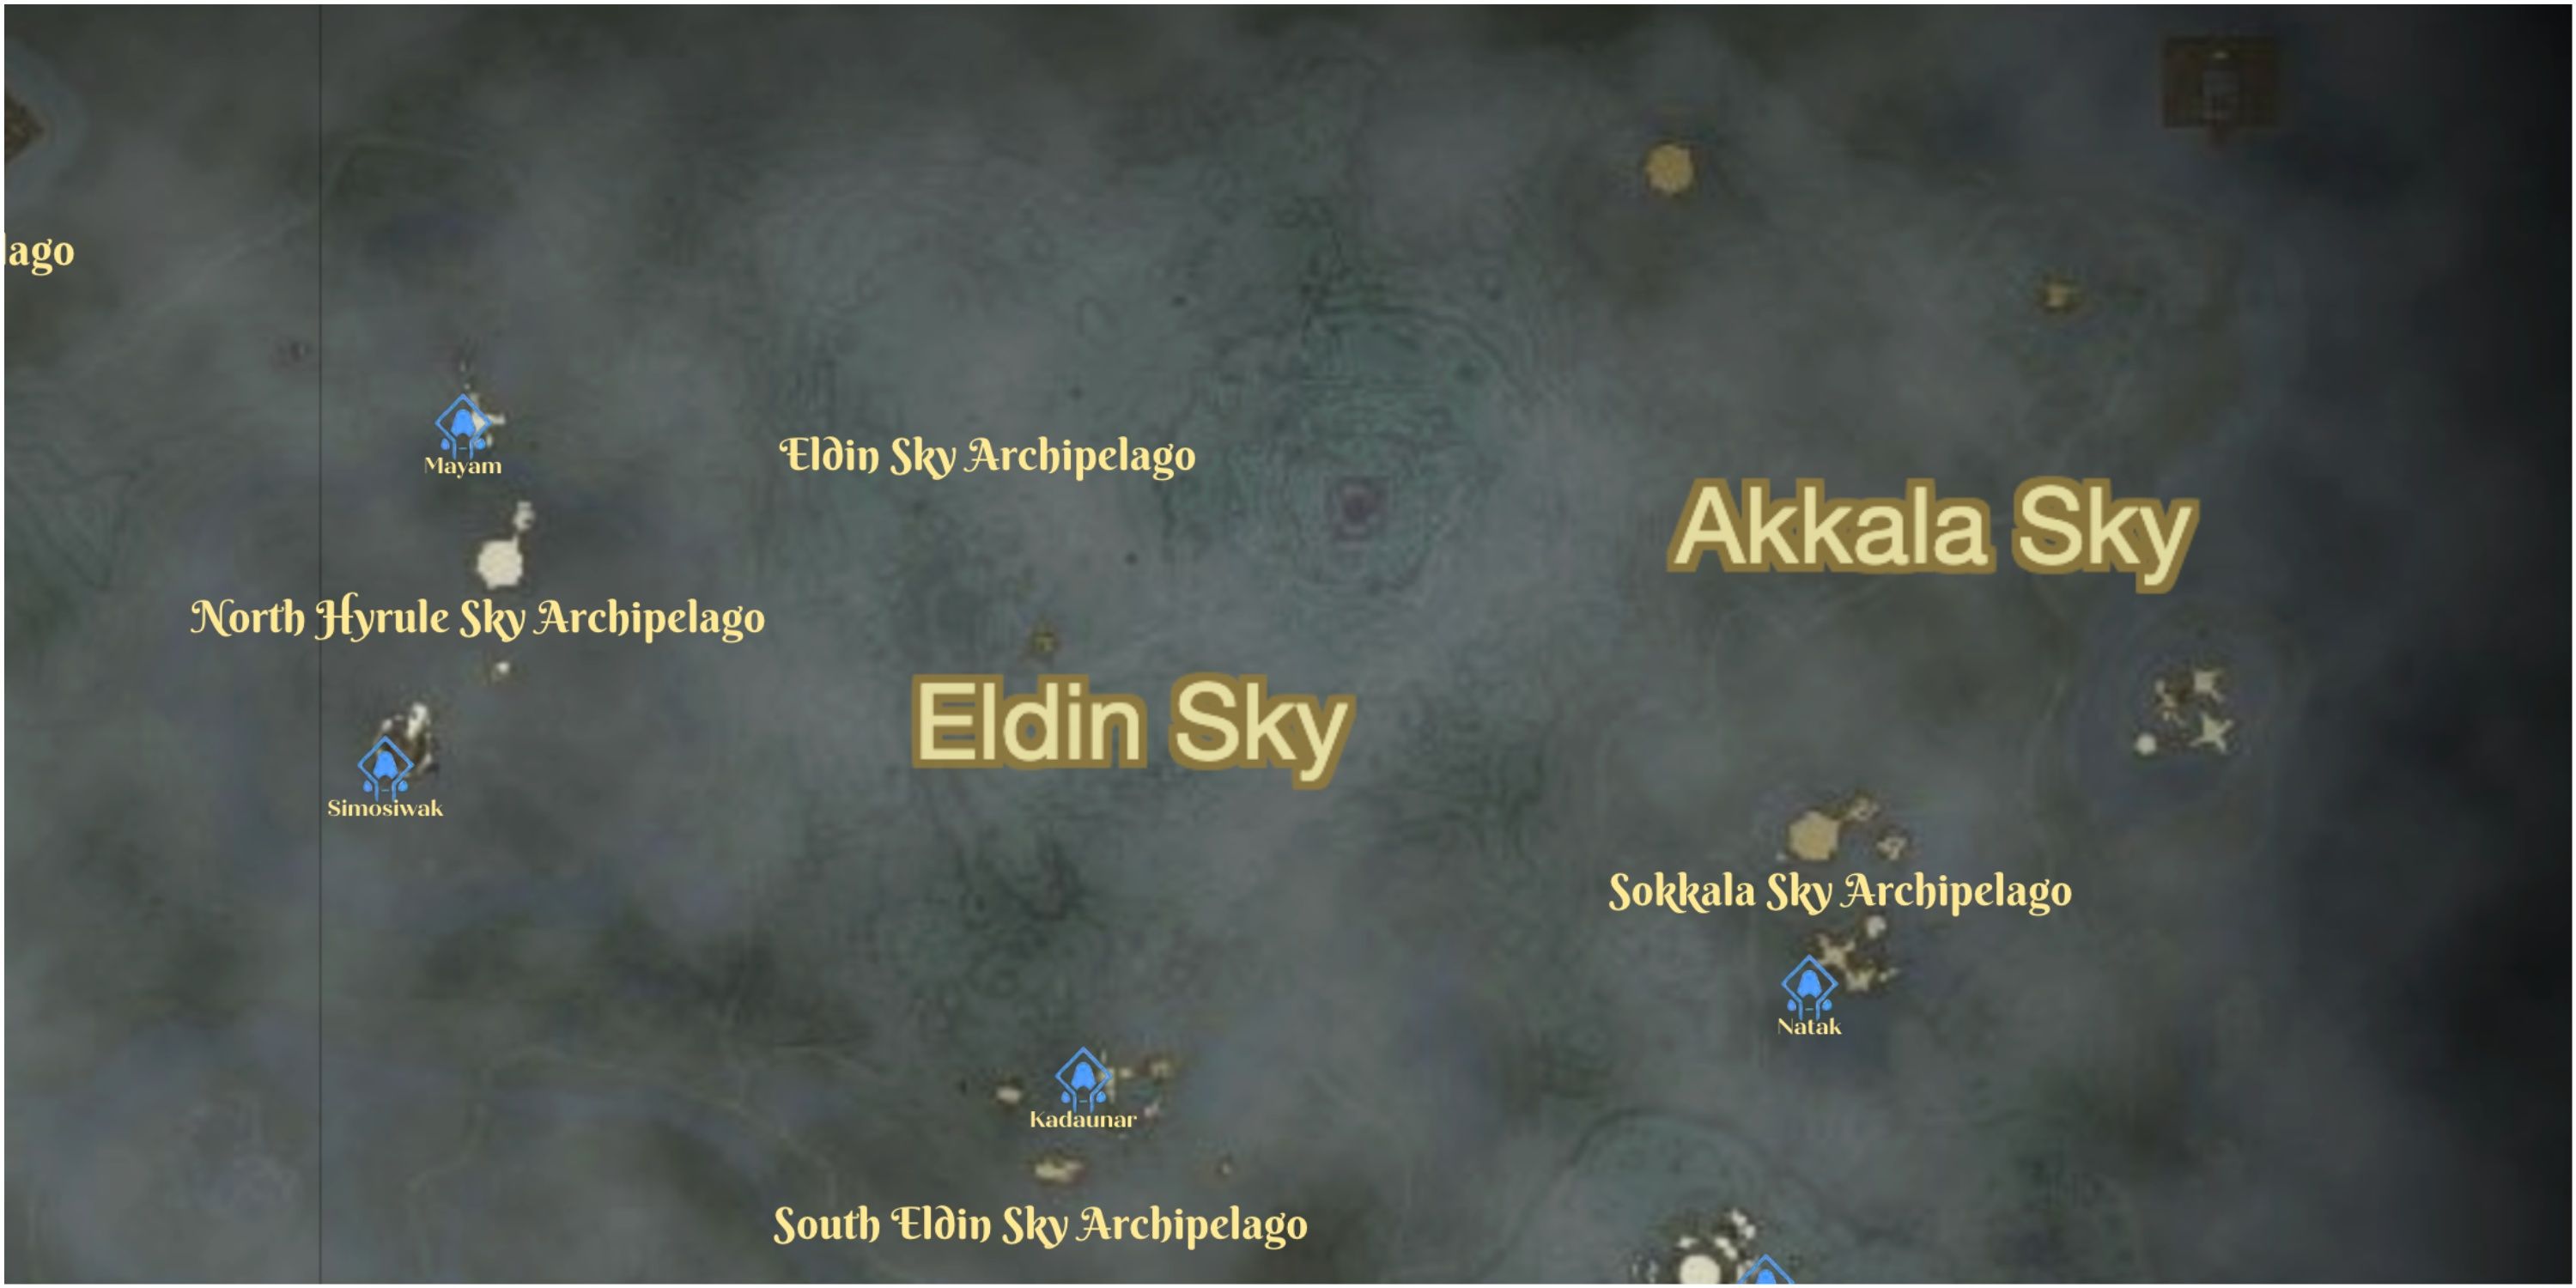 Akkala Sky Map